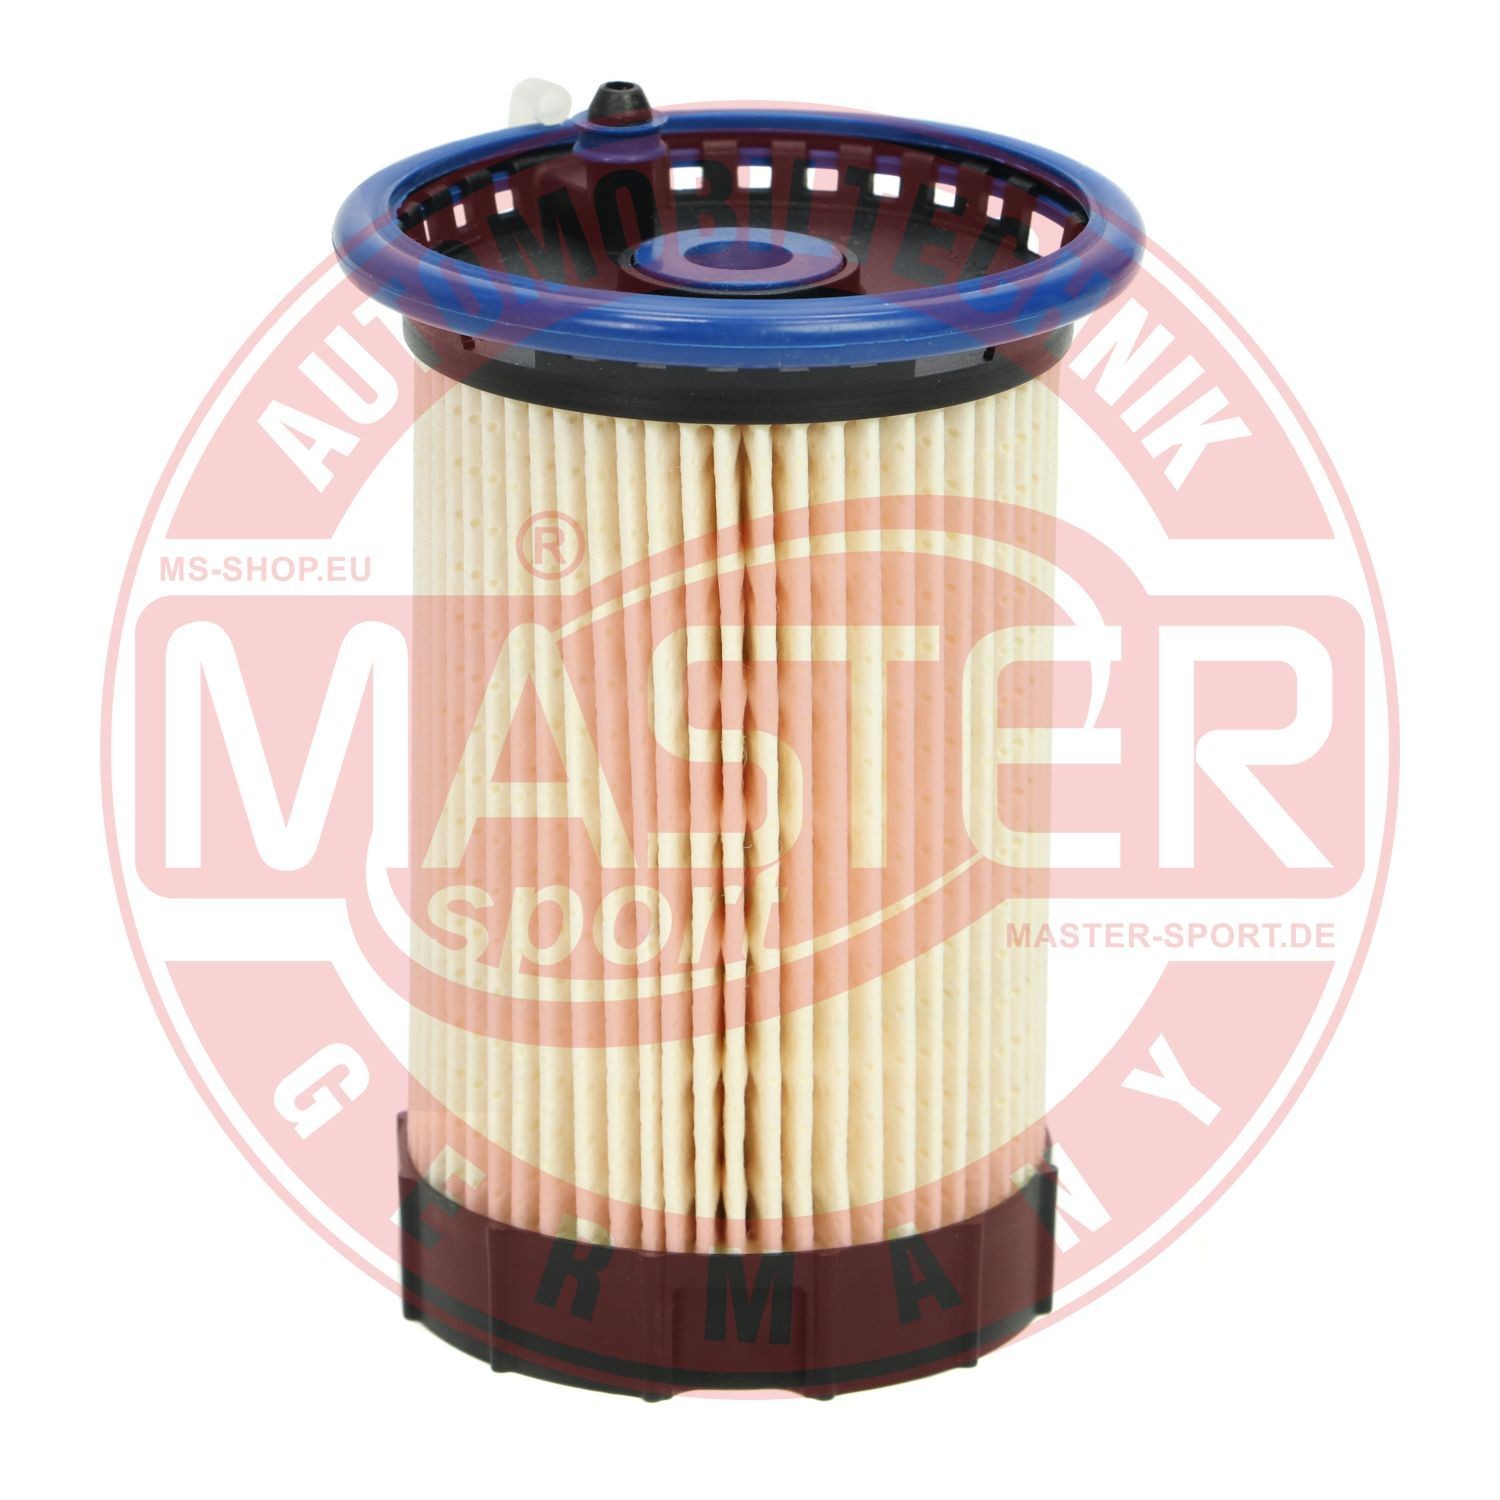 Original 8014-KF-PCS-MS MASTER-SPORT Fuel filter ALFA ROMEO